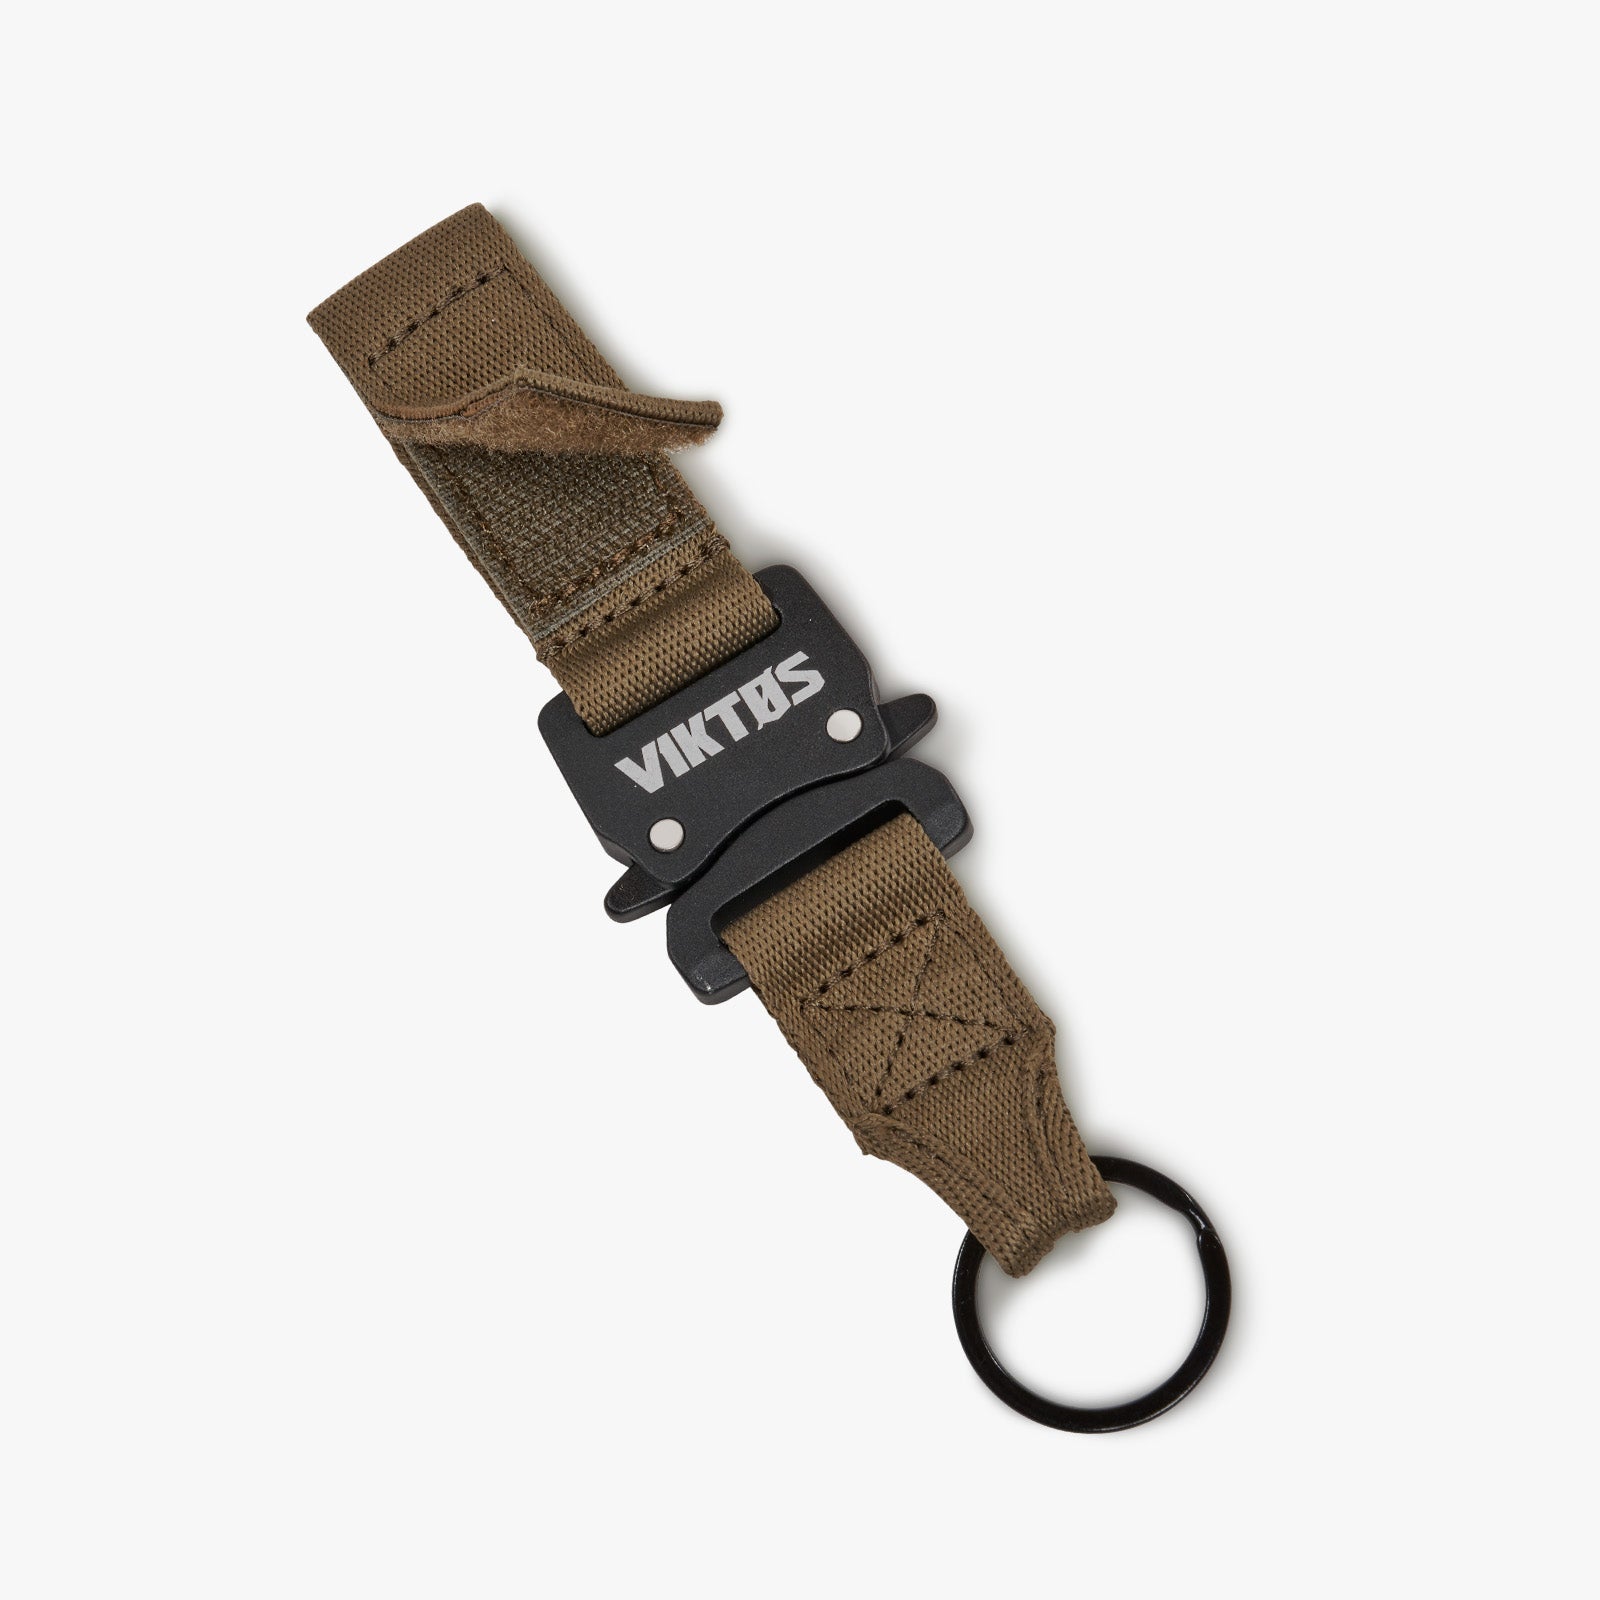 VIKTOS Bulldog Keychain Accessories VIKTOS Coyote Tactical Gear Supplier Tactical Distributors Australia